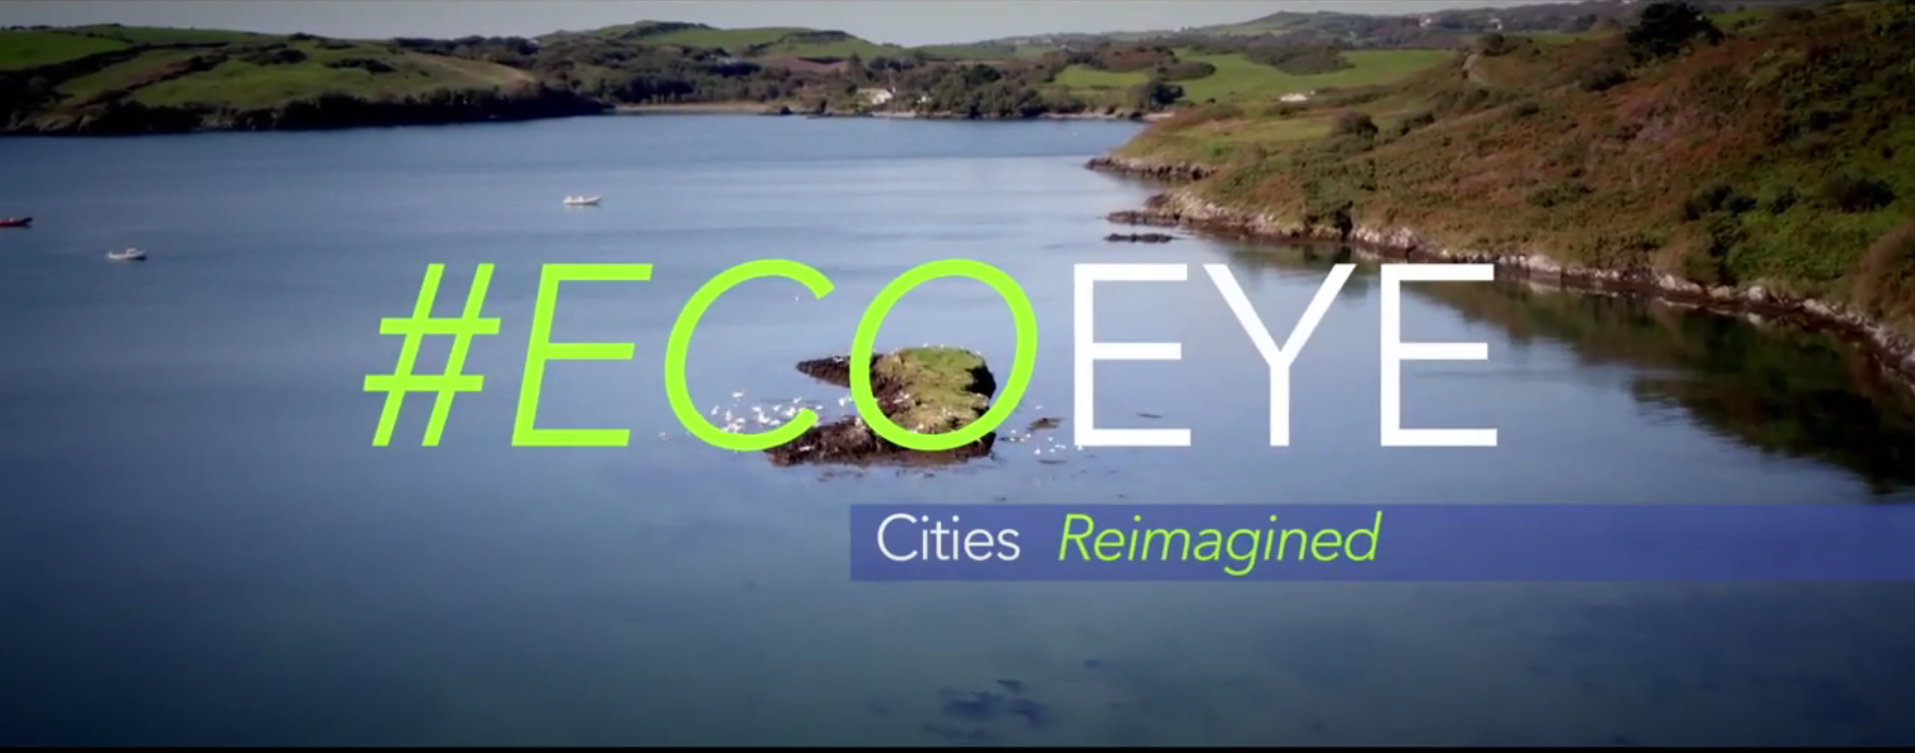 Eco Eye Cities Reimagined